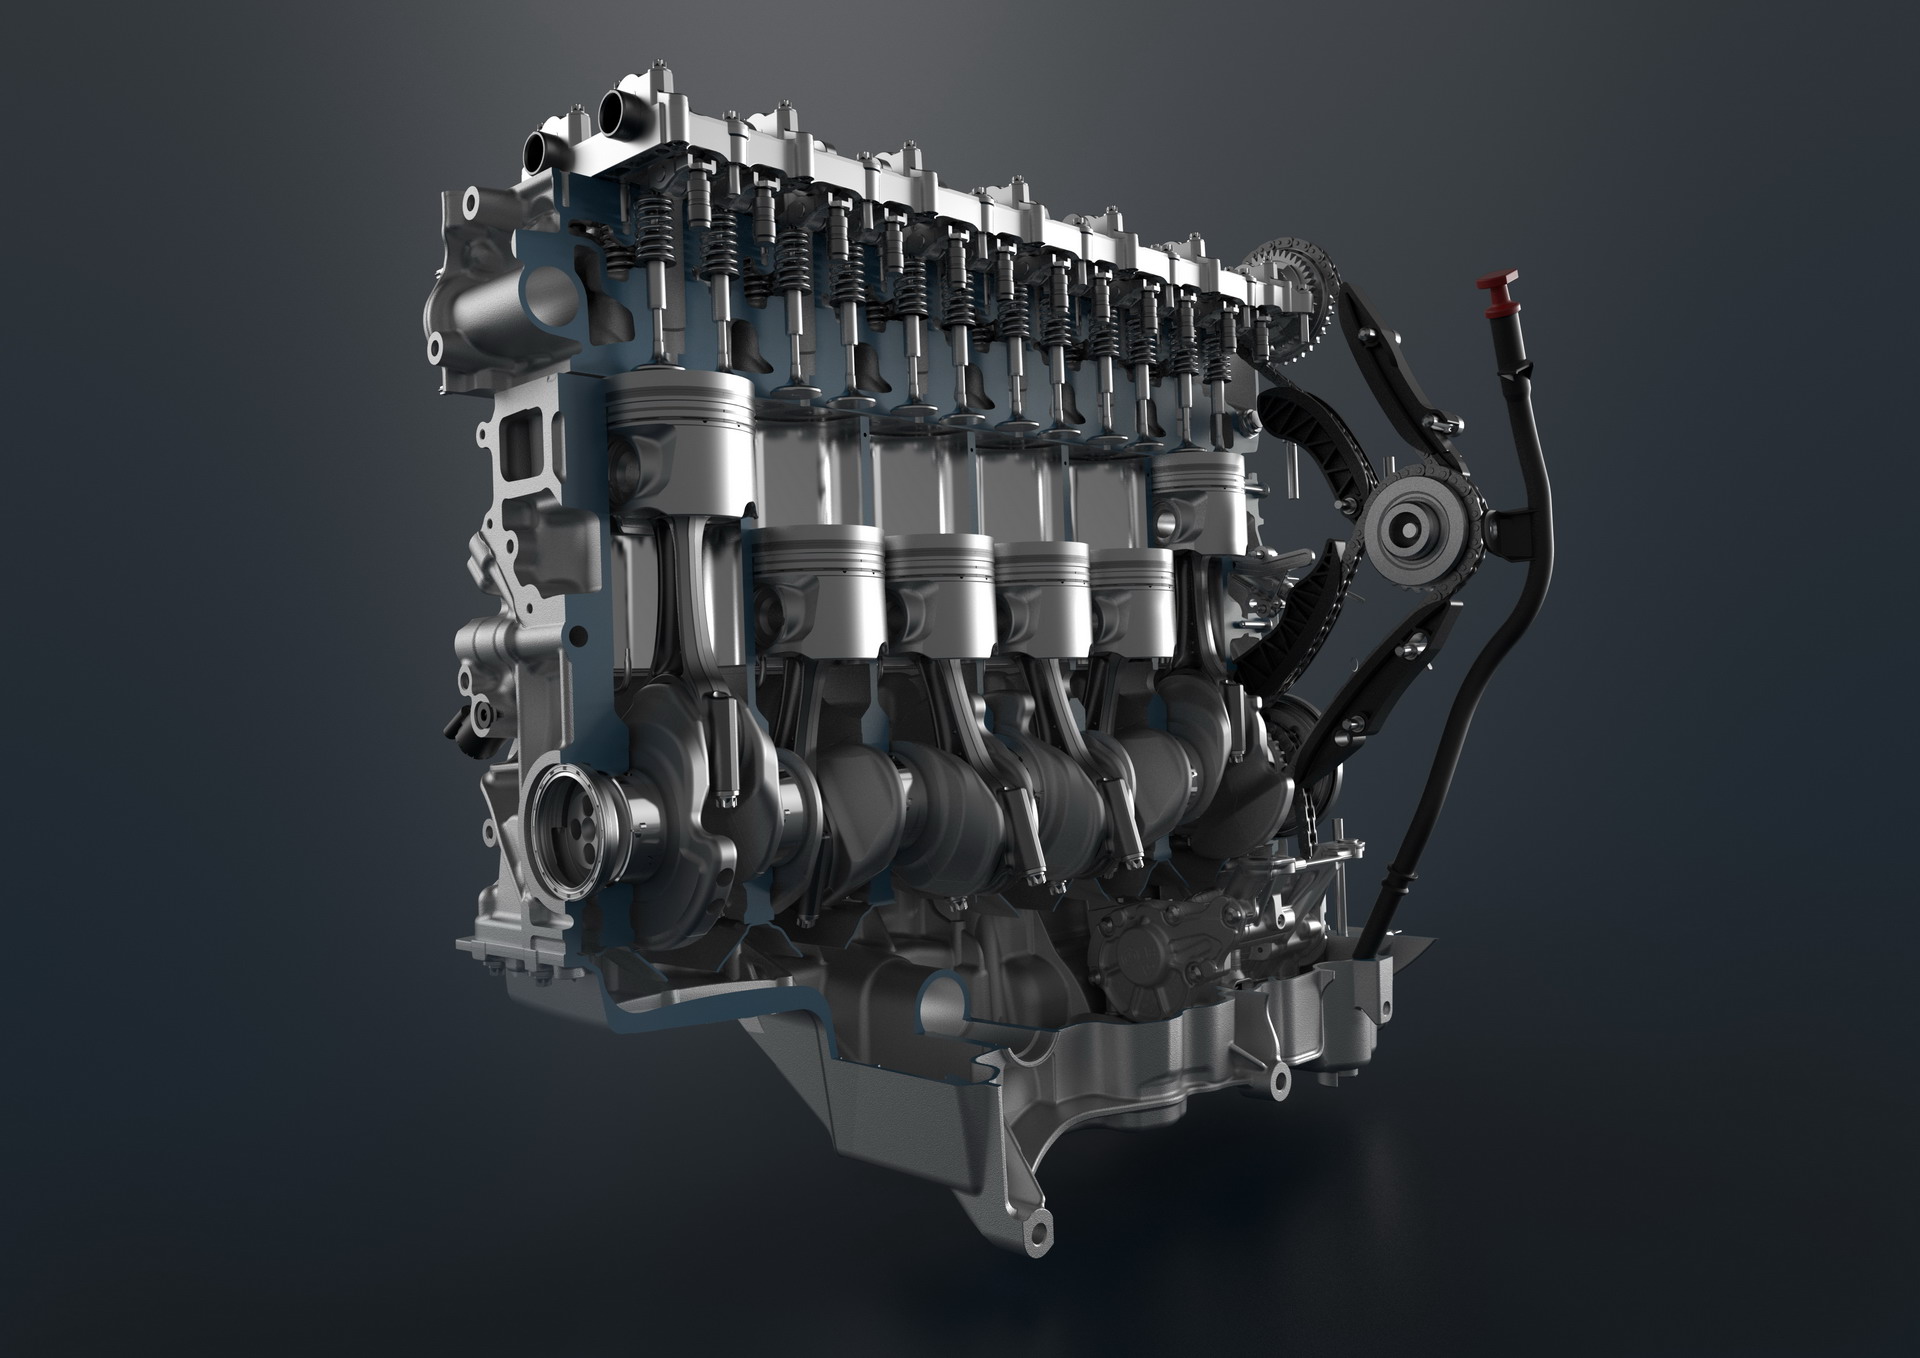 https://cdn.bmwblog.com/wp-content/uploads/2020/05/The-New-BMW-5-Series-LCI-Engines-3.jpg